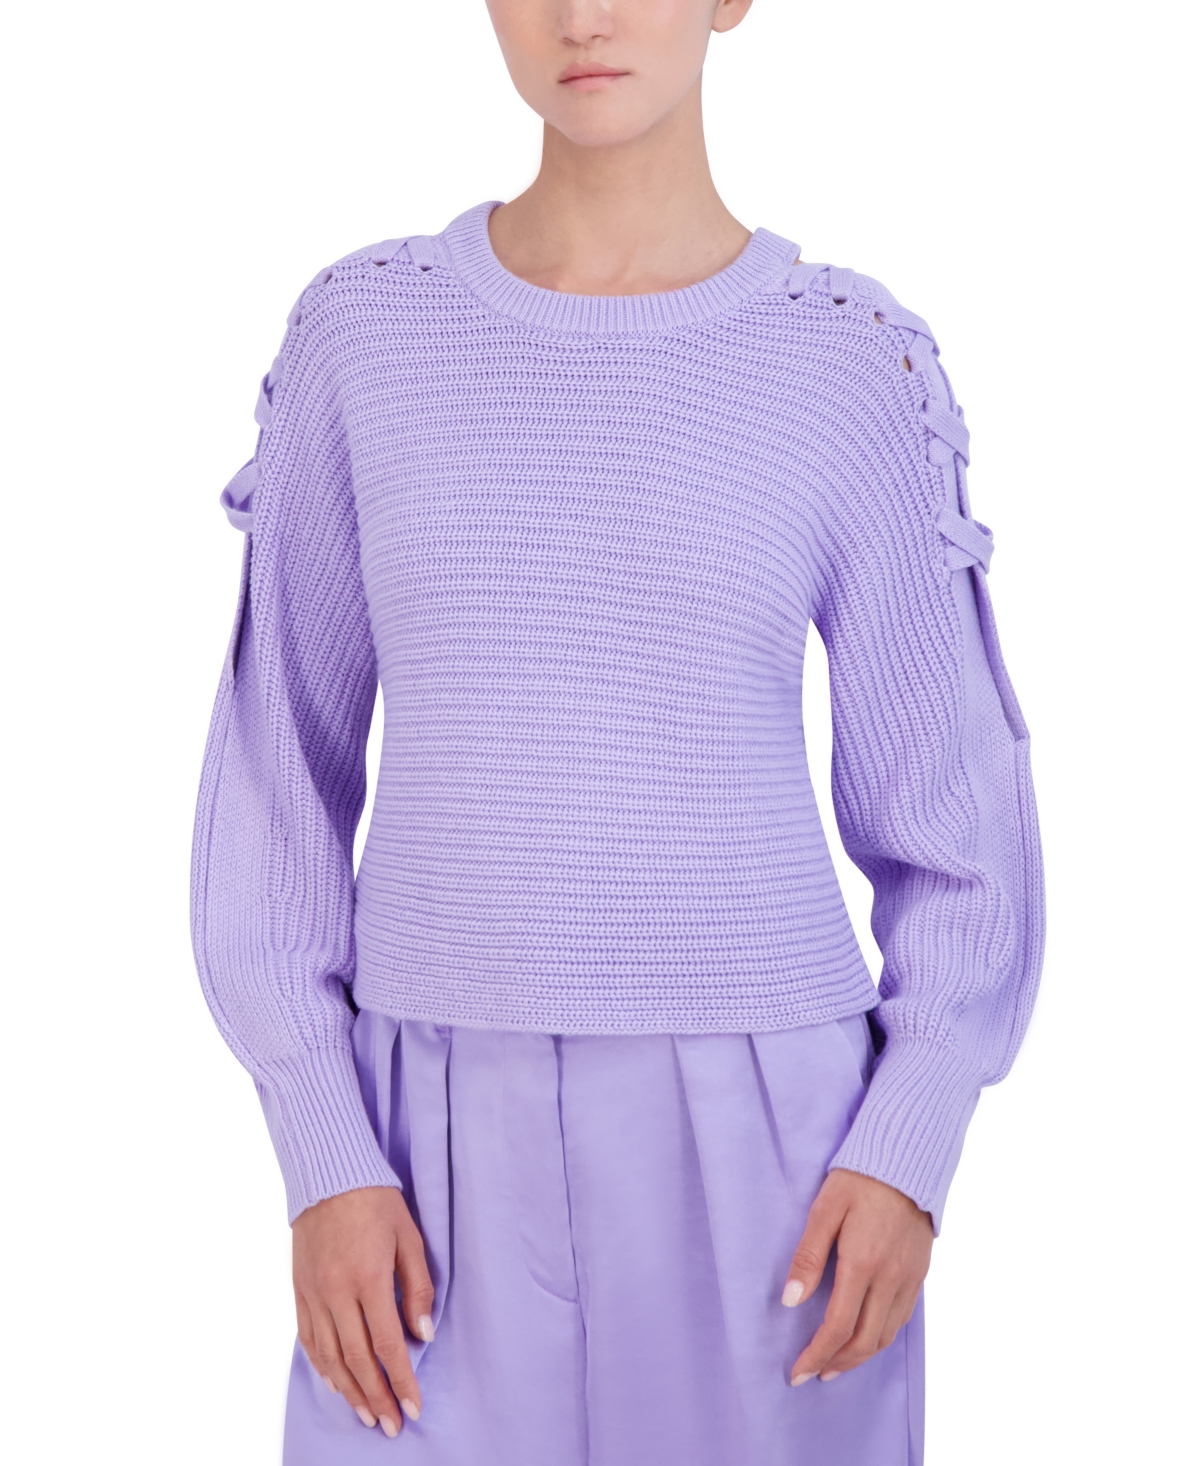 Women's Lace-Up Shoulder Sweater - Lavender